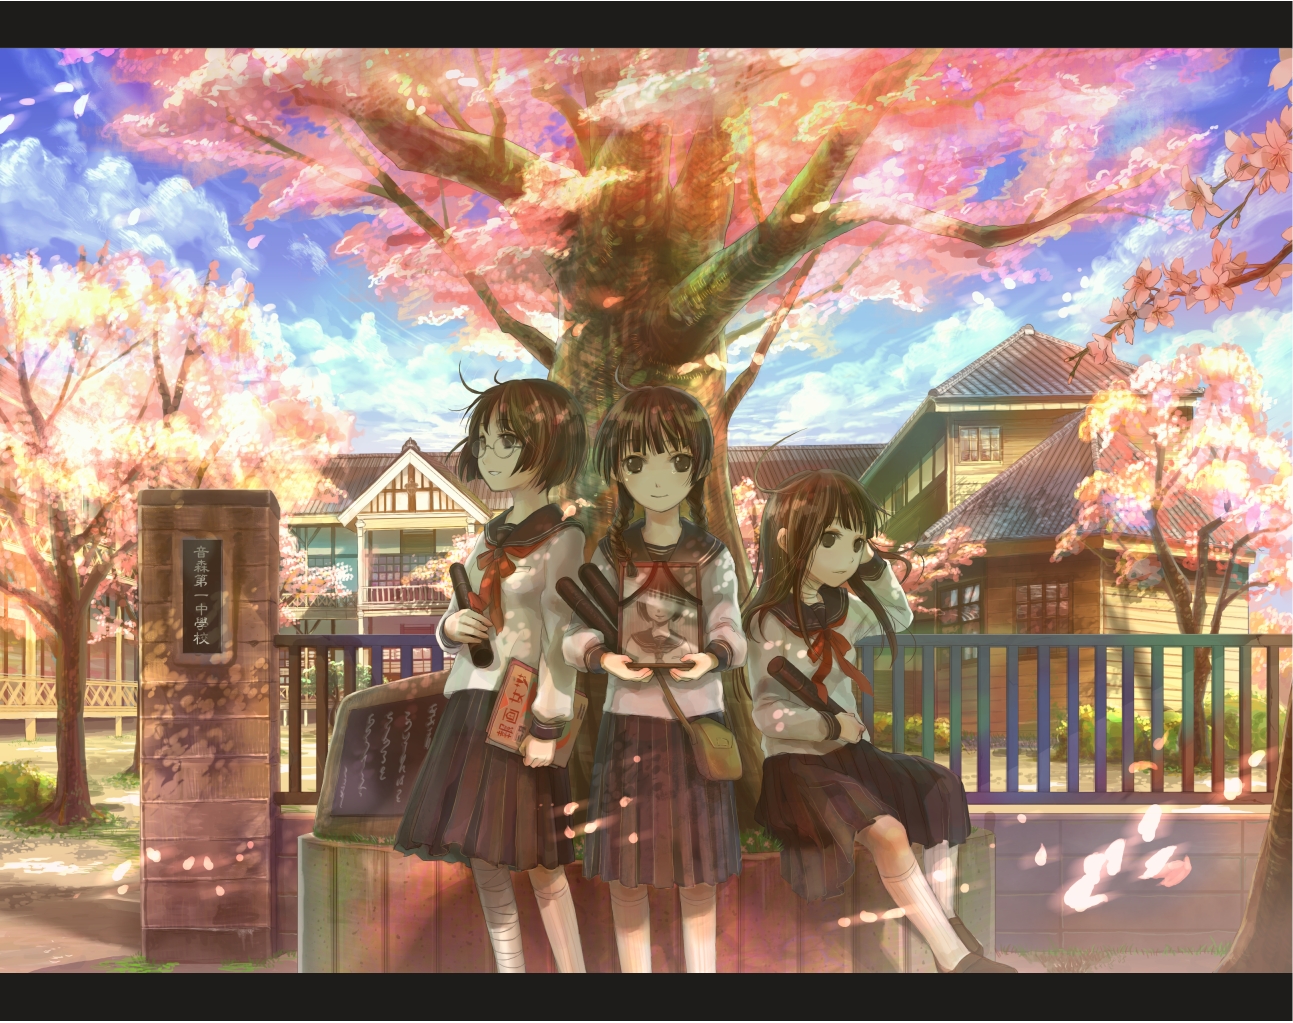 Anime girl desktop wallpaper by Fuji Choko.